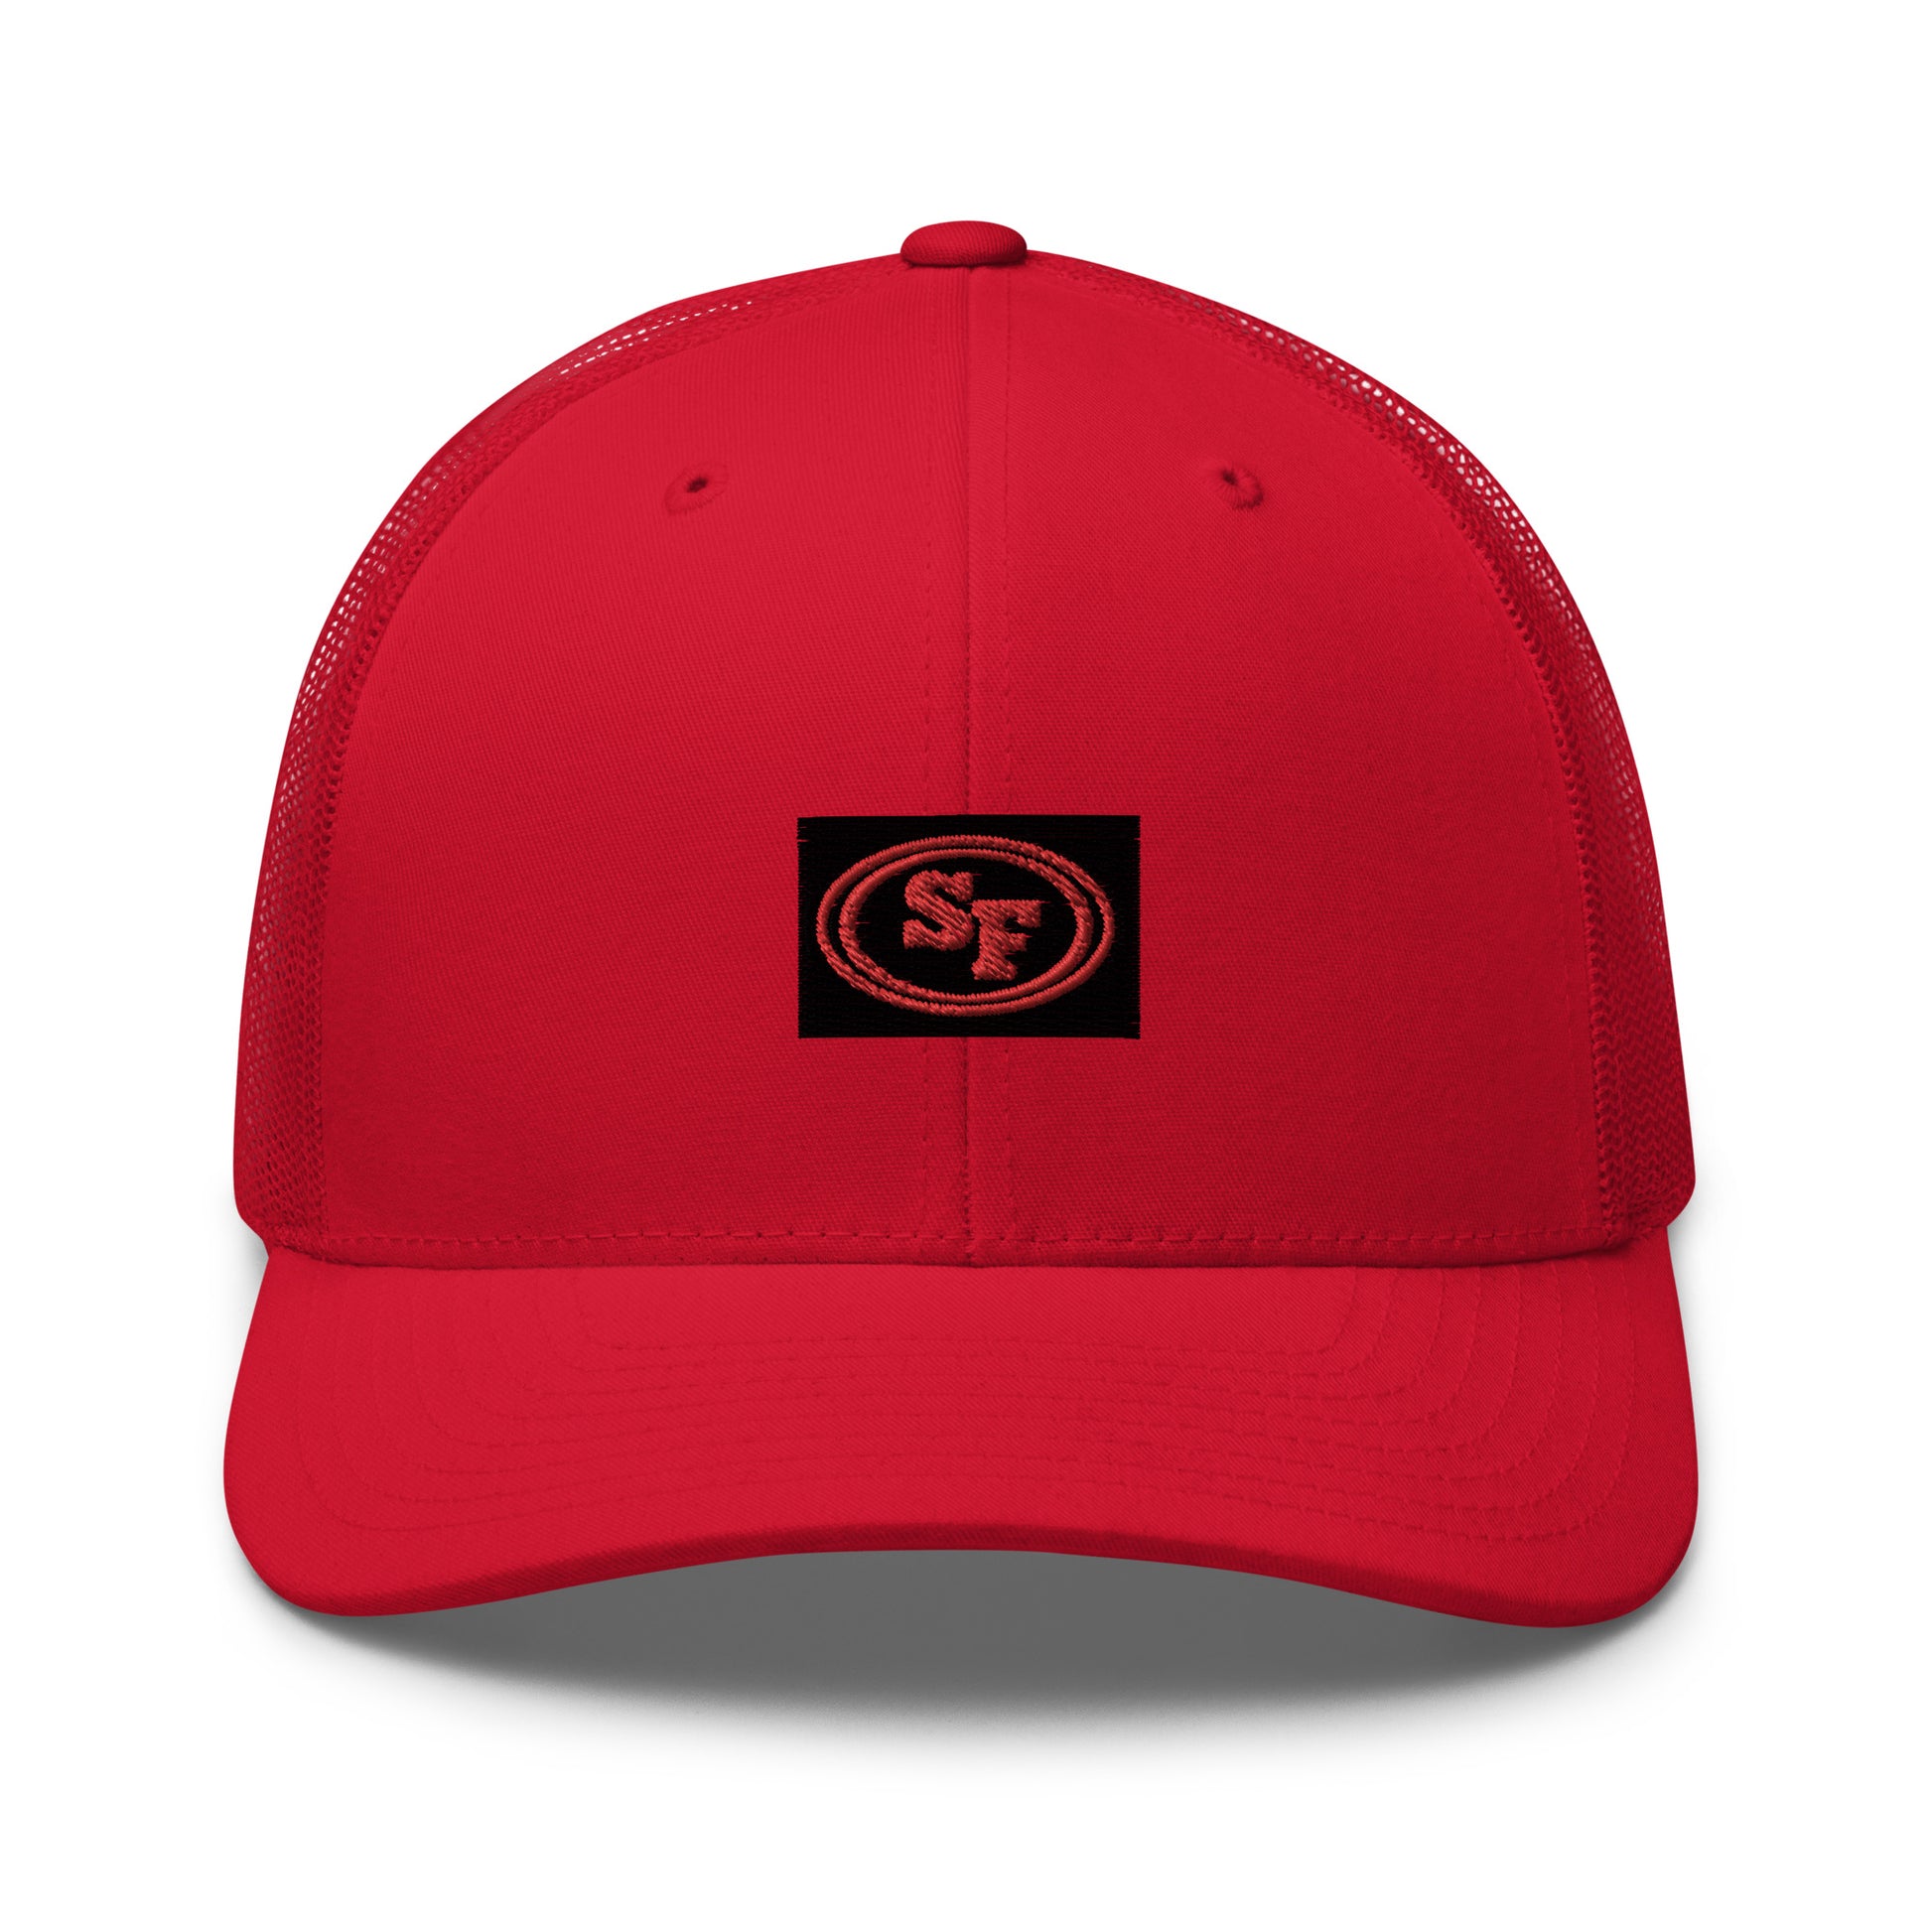 San Francisco Hat / 49ers Hat / Kyle Shanahan Trucker Cap Navy/ White